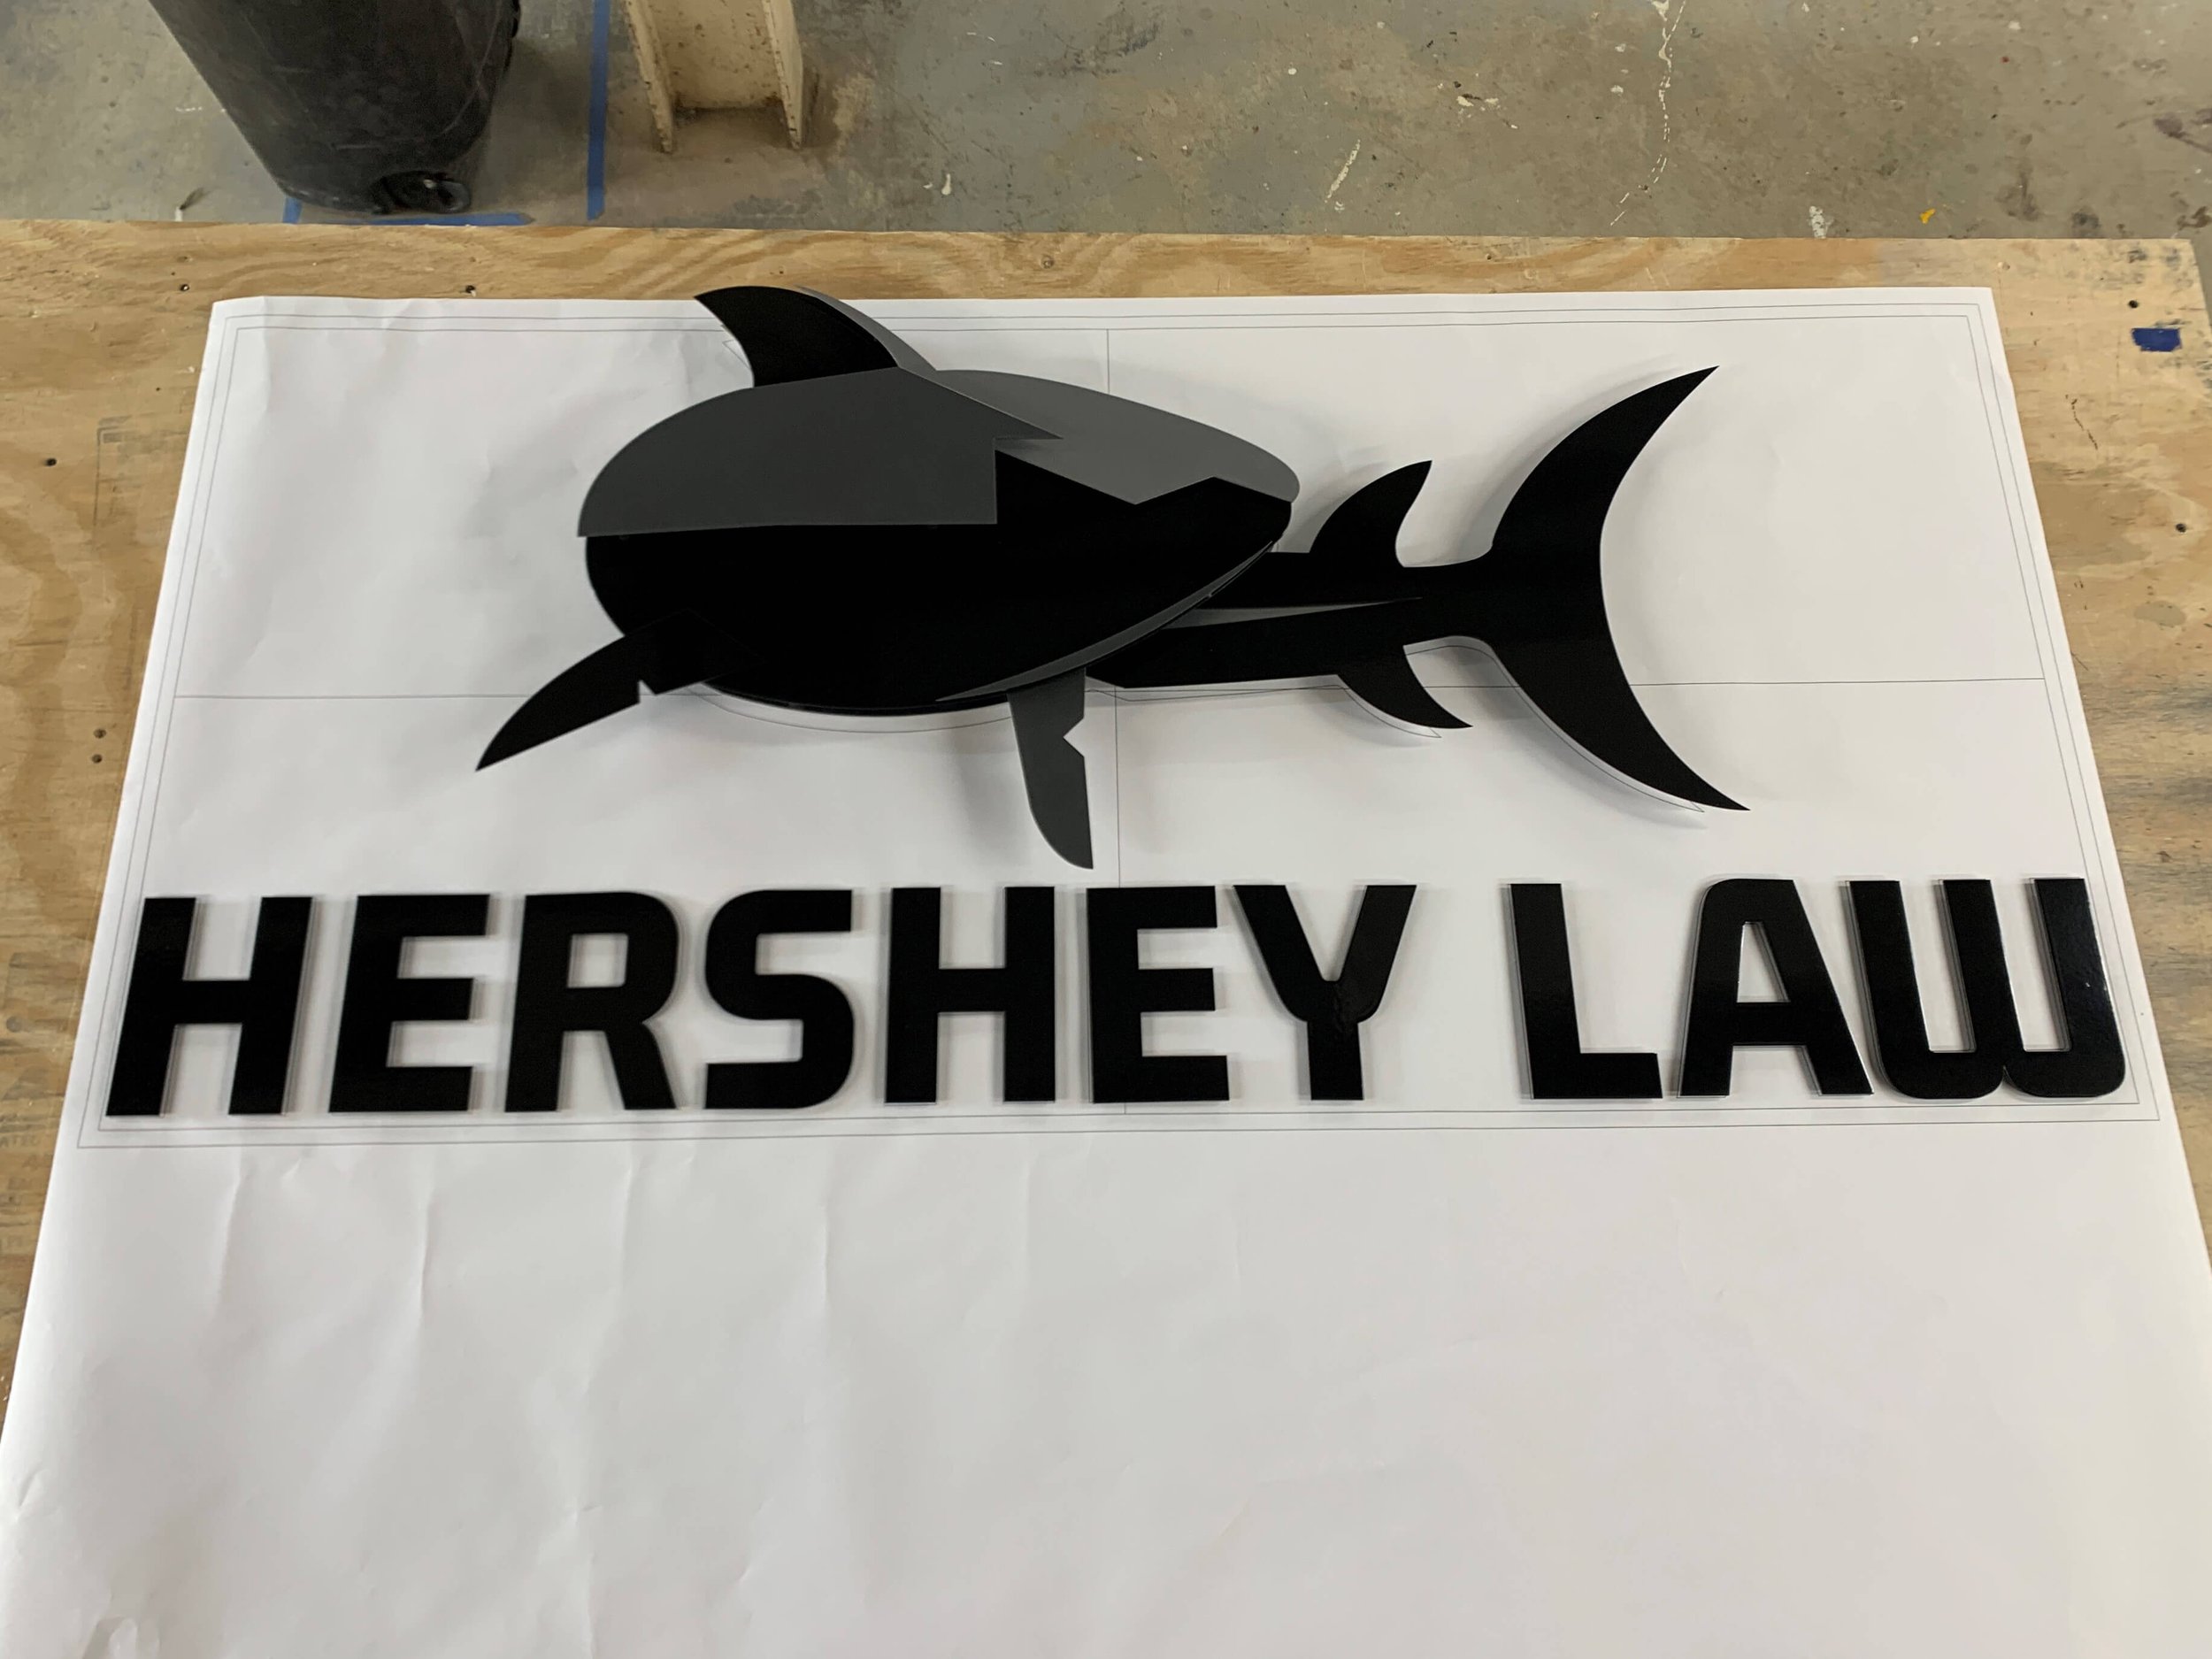 hershey law custom metal law firm signs - front.JPG